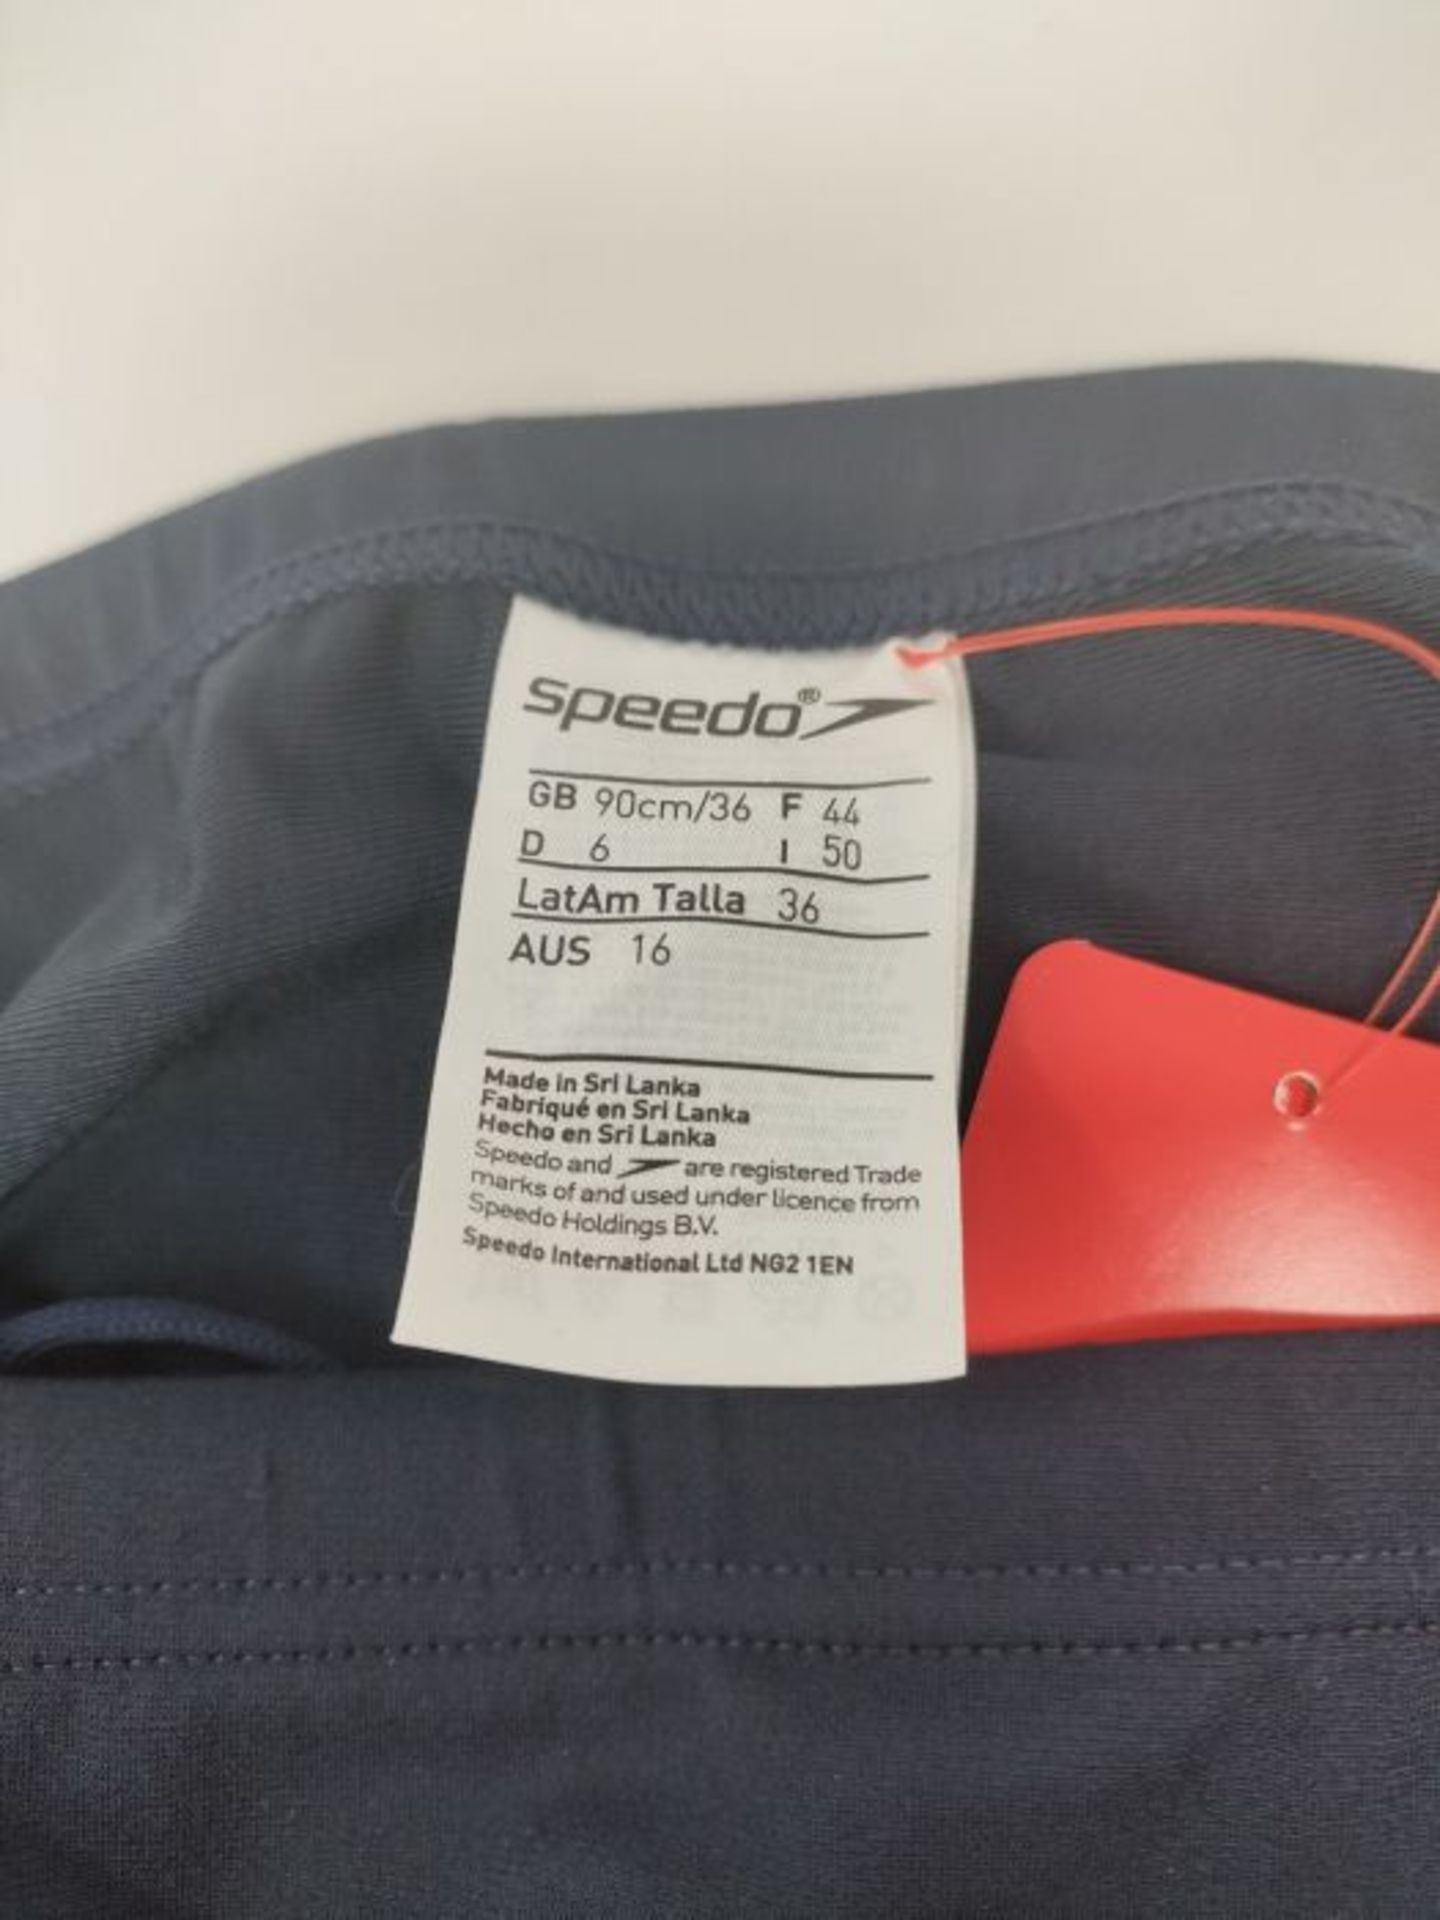 Speedo ECO Endurance+ 7cm Swimming Briefs, Comfortable Fit, 100% Chlorine Resistant, Q - Image 3 of 3